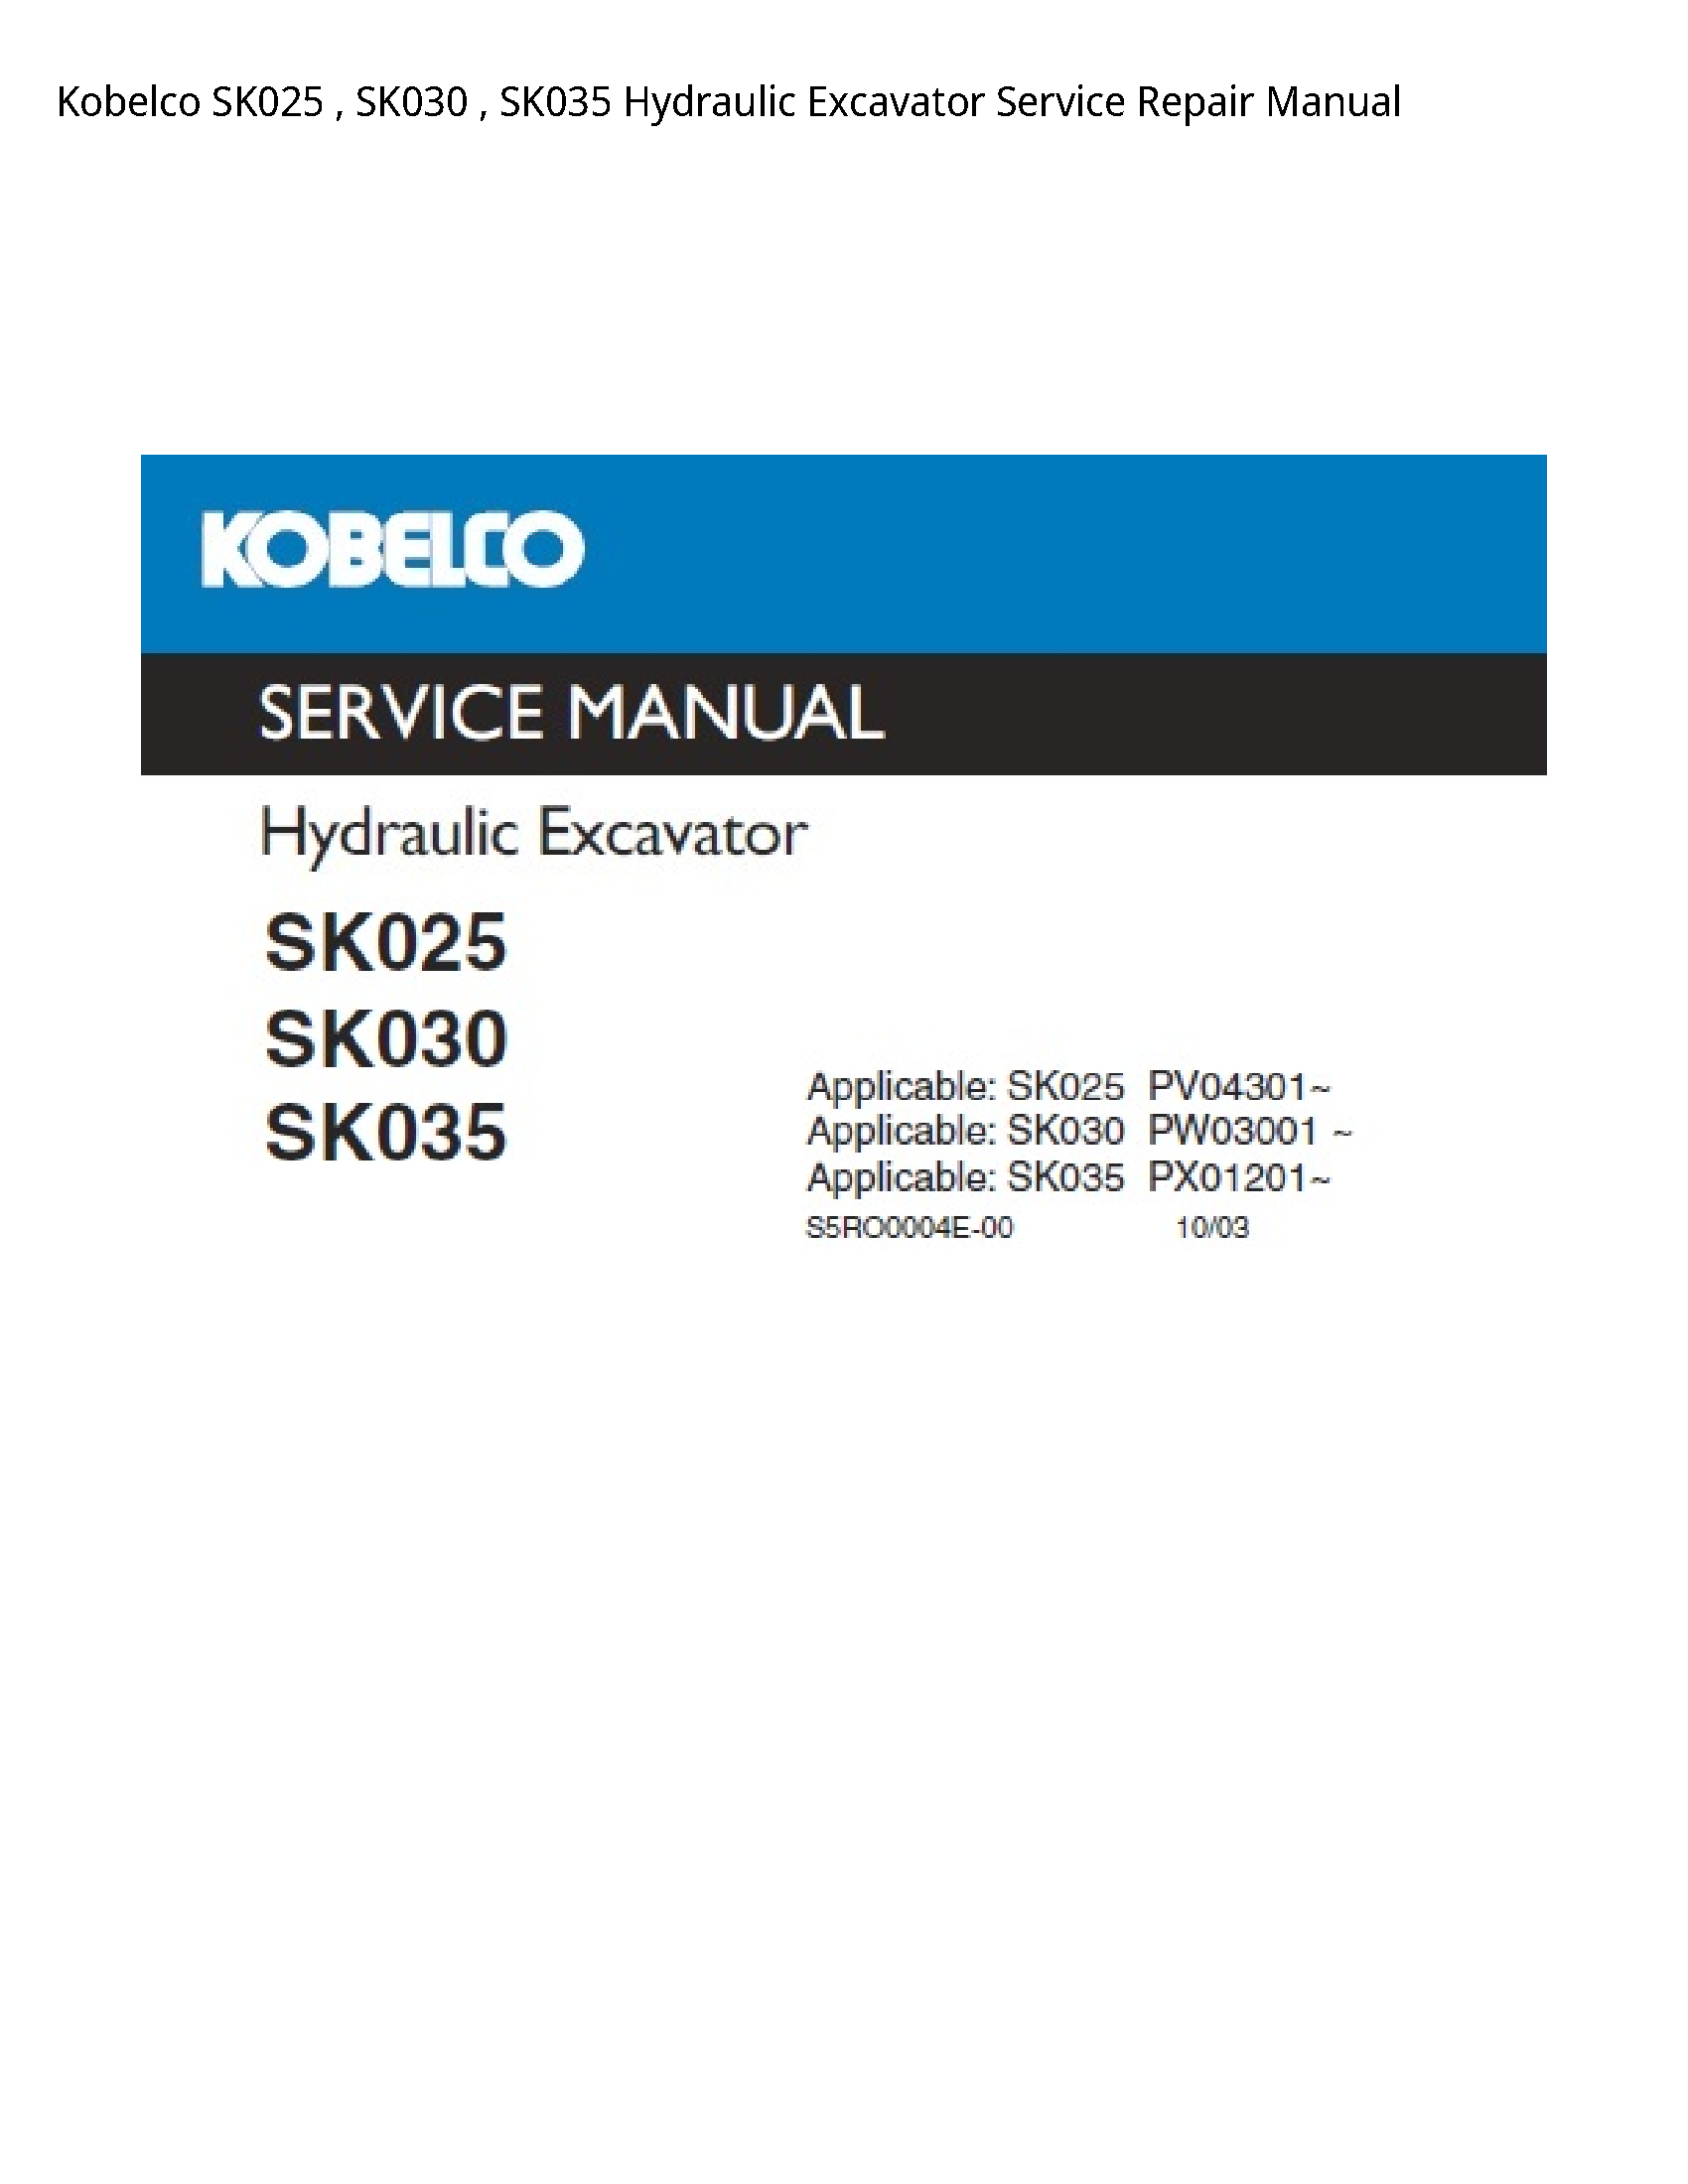 Kobelco SK025 Hydraulic Excavator manual